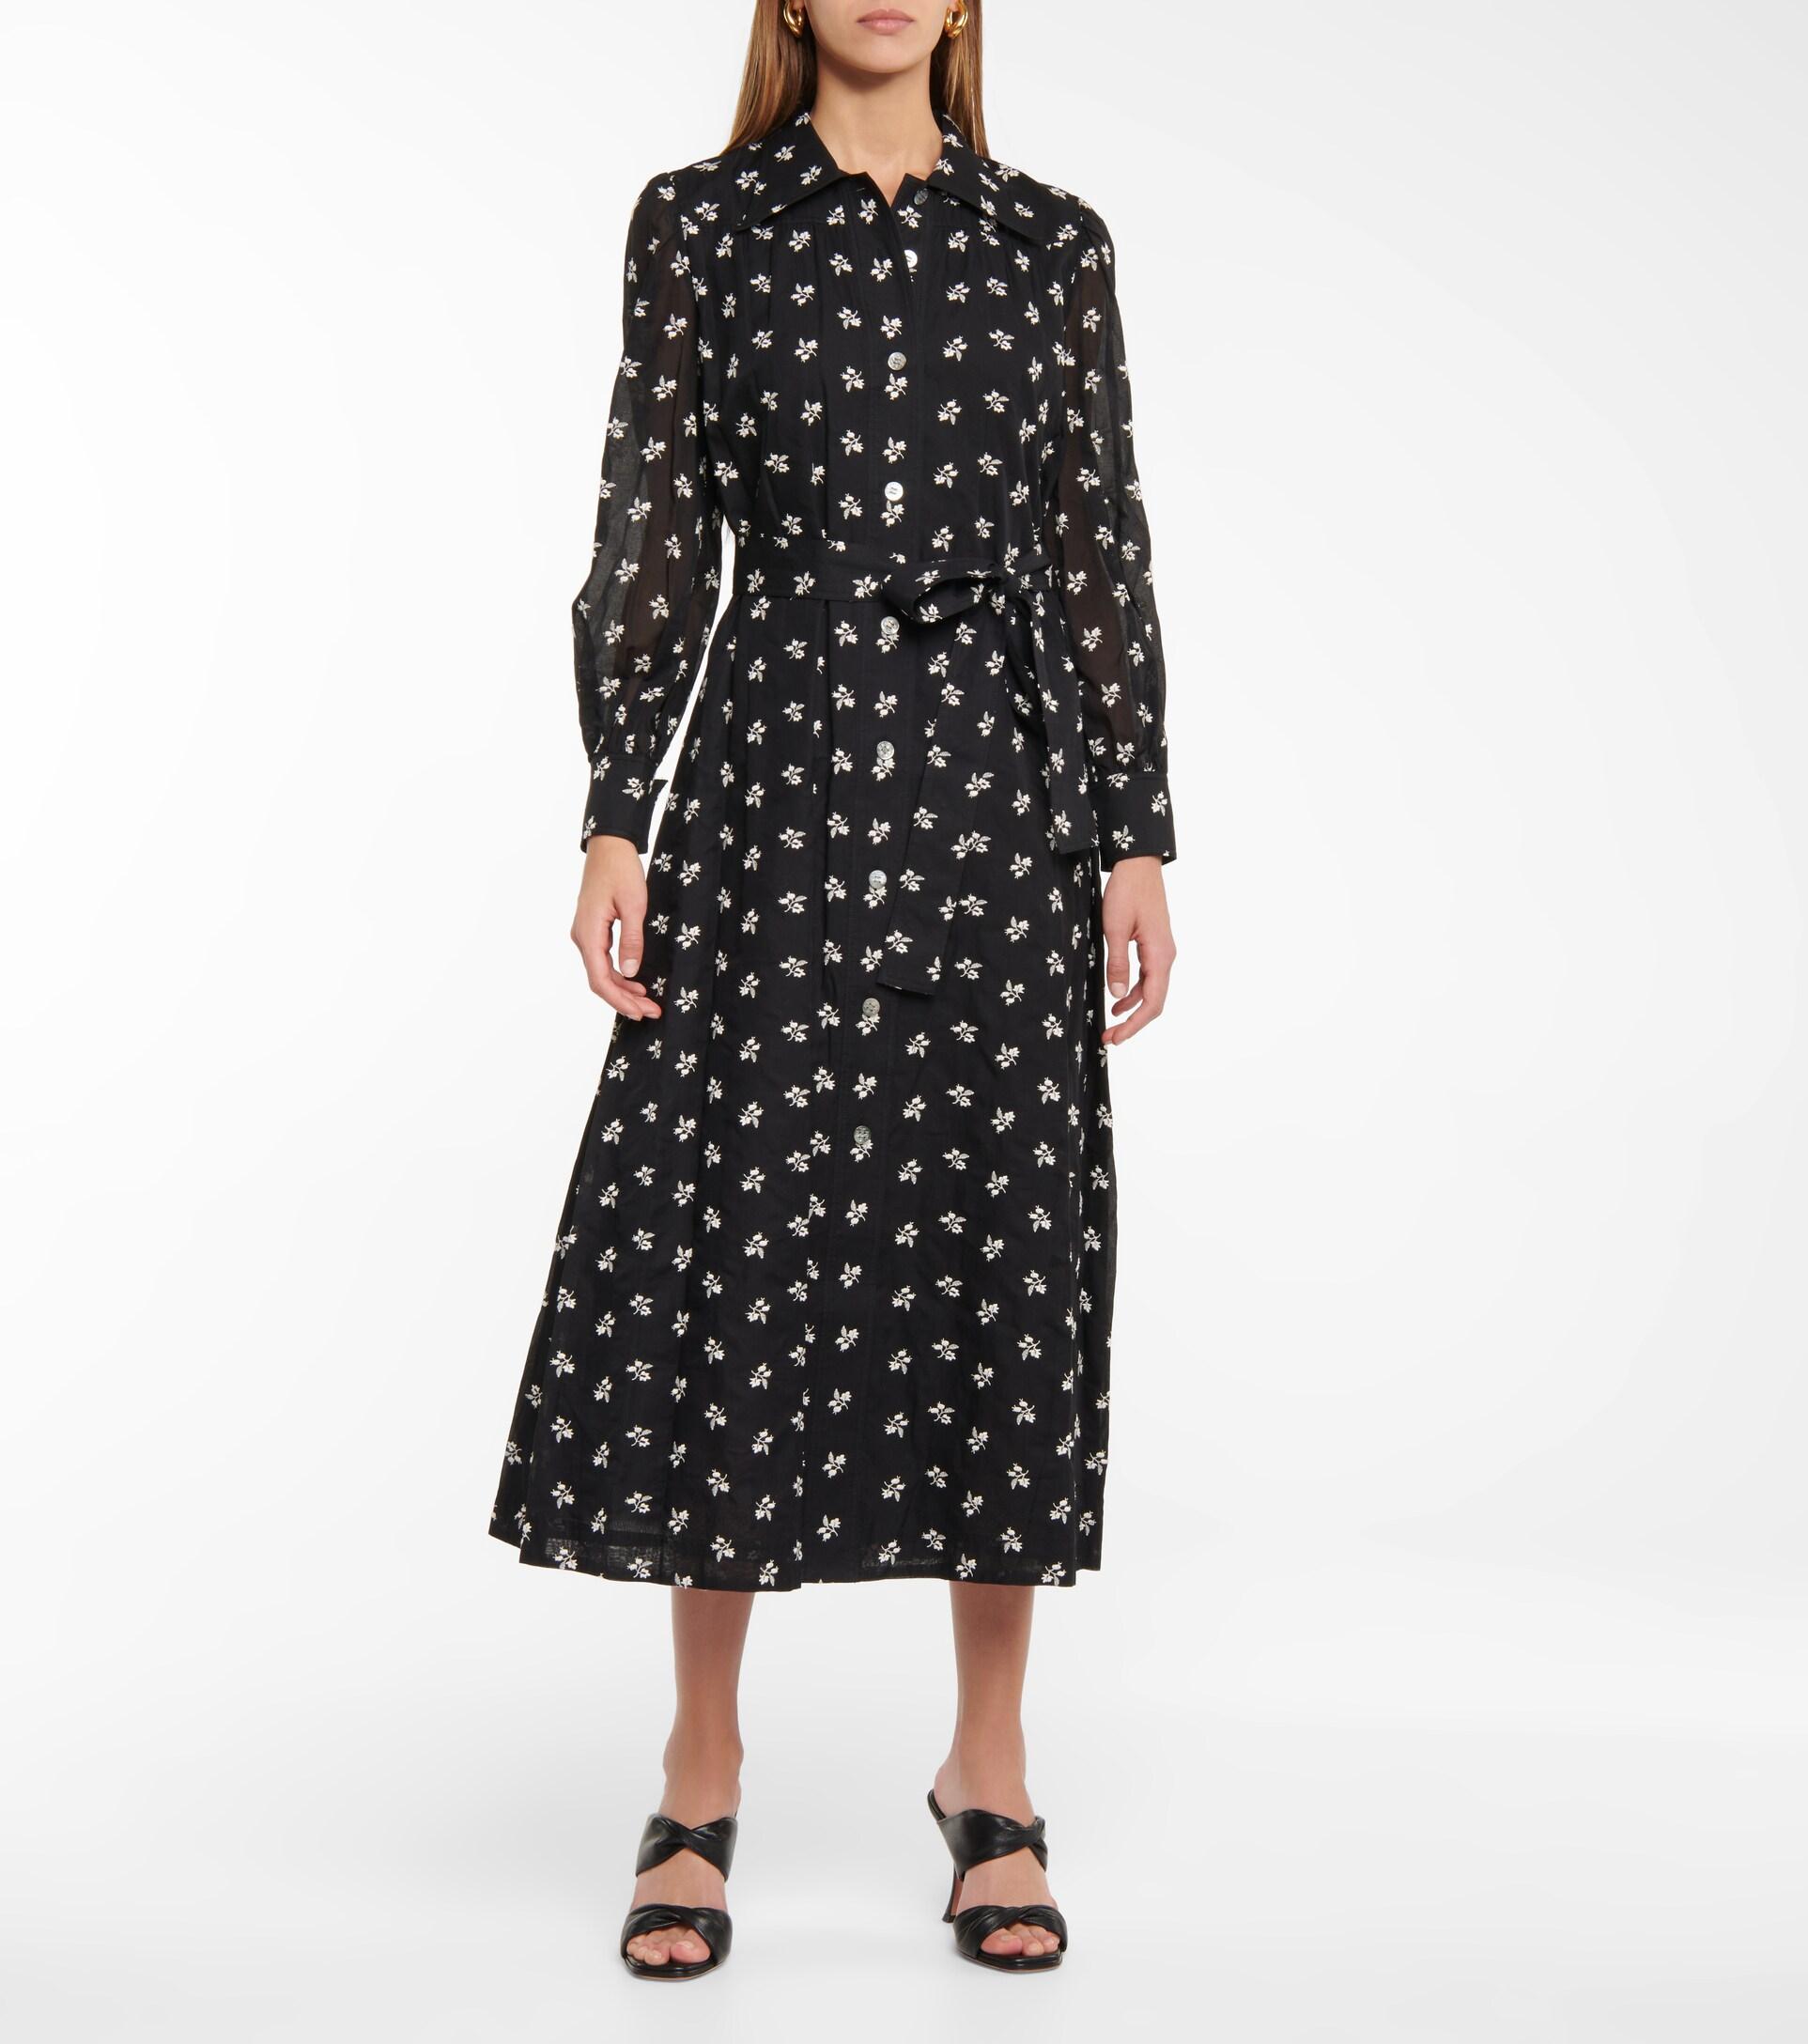 Tory Burch Artist Floral Cotton Midi Dress in Black | Lyst